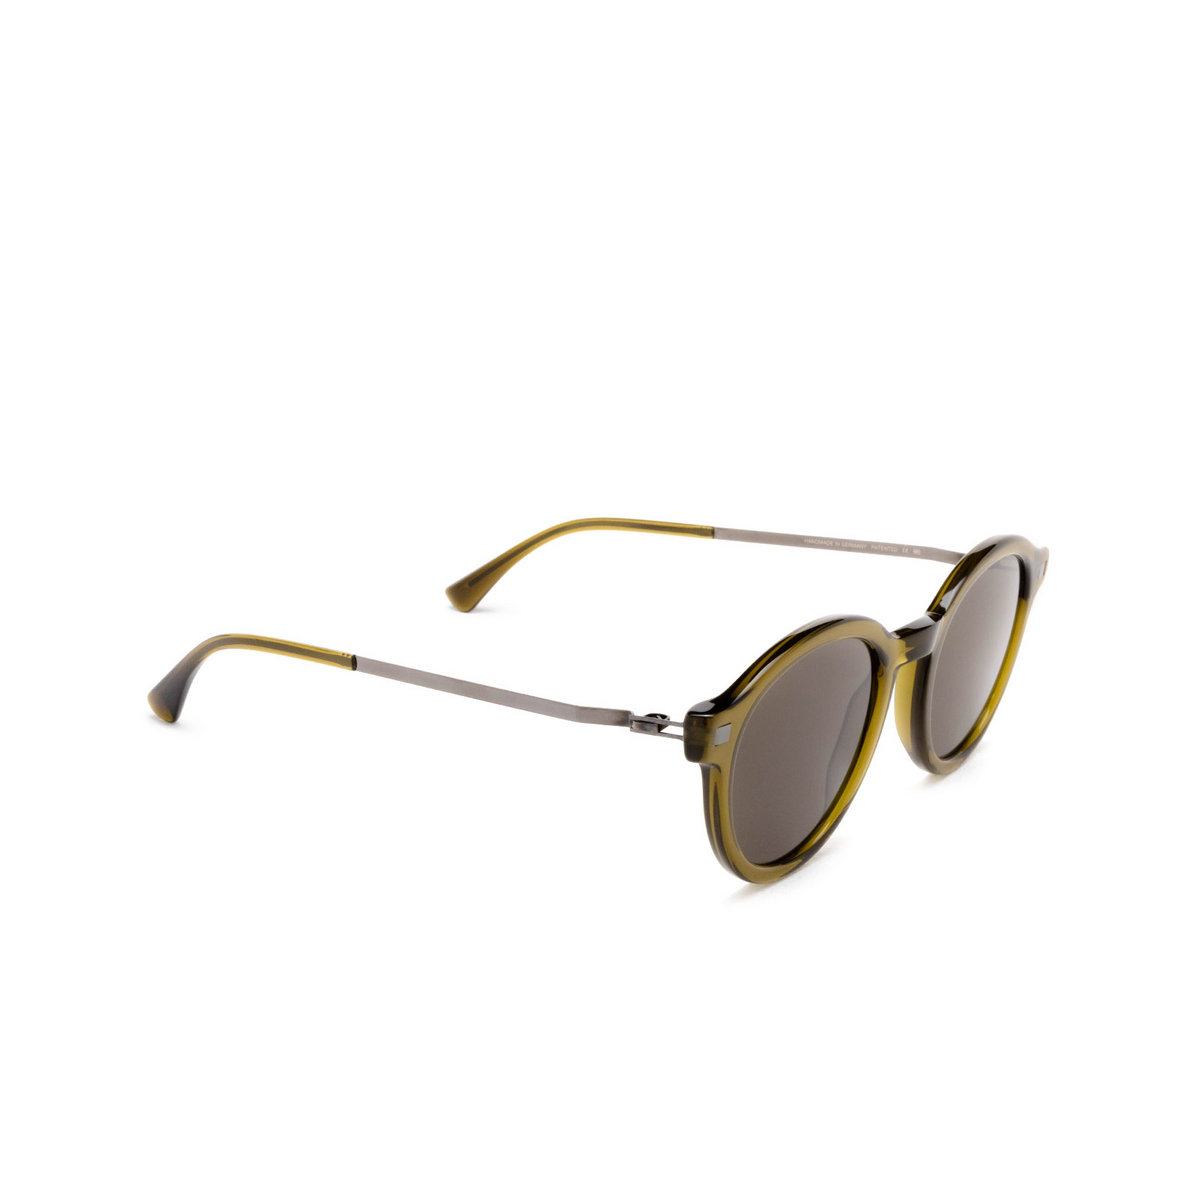 Mykita KETILL Sunglasses 723 C114 Peridot/Shiny Graphite - three-quarters view